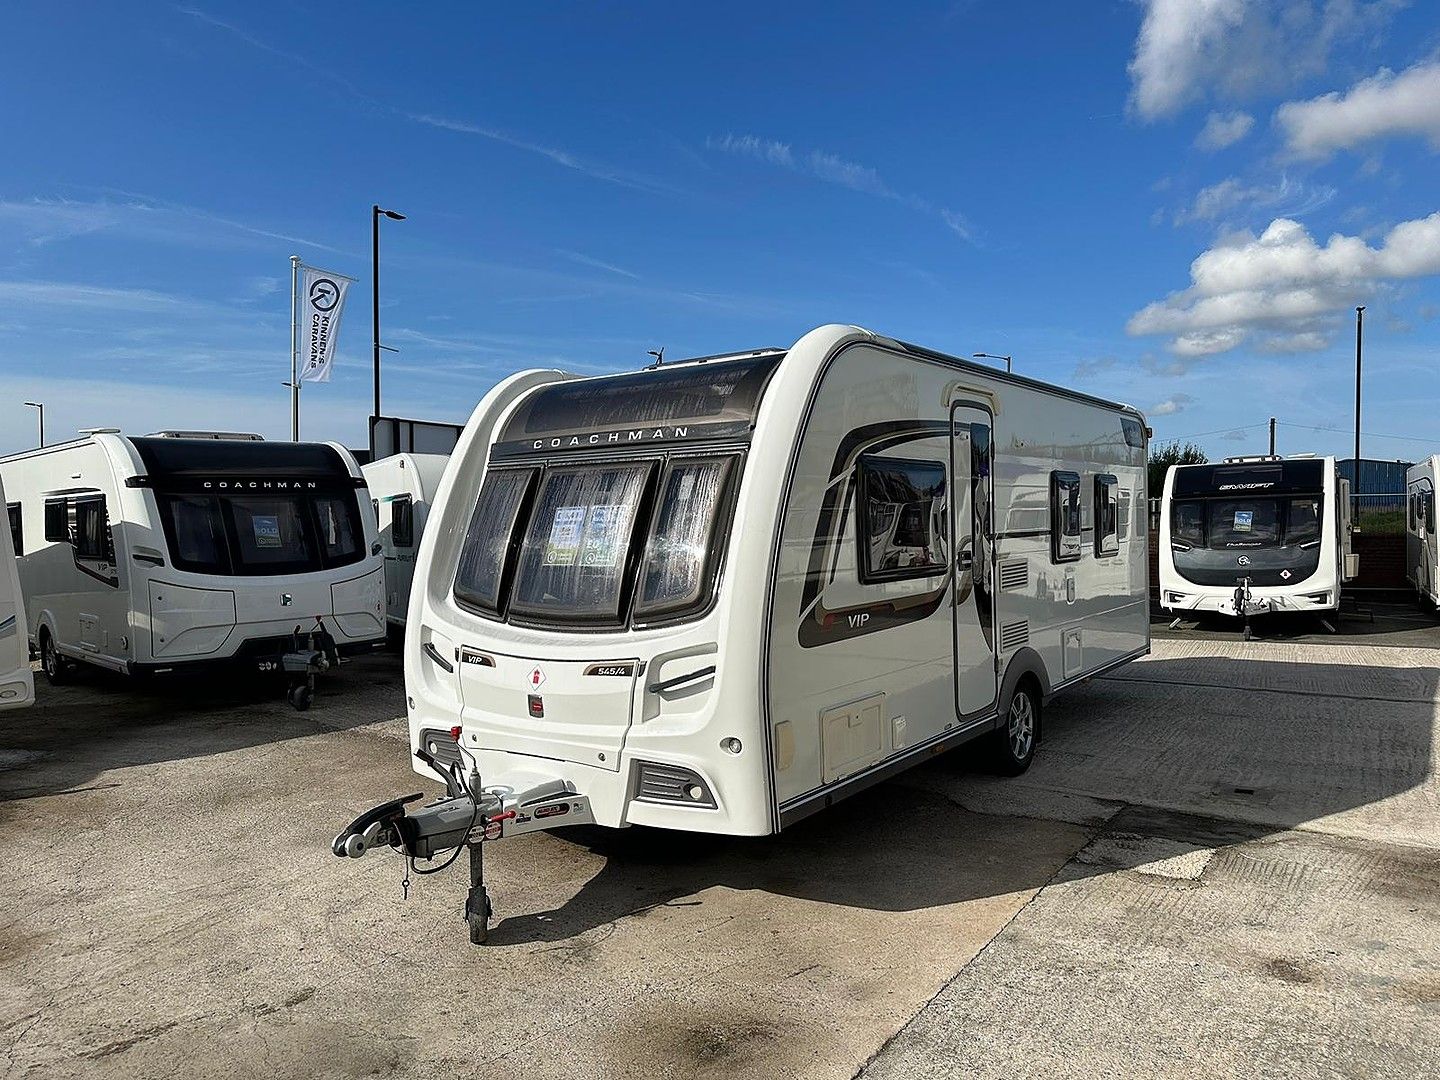 CoachmanVIP 545Touring Caravan for sale